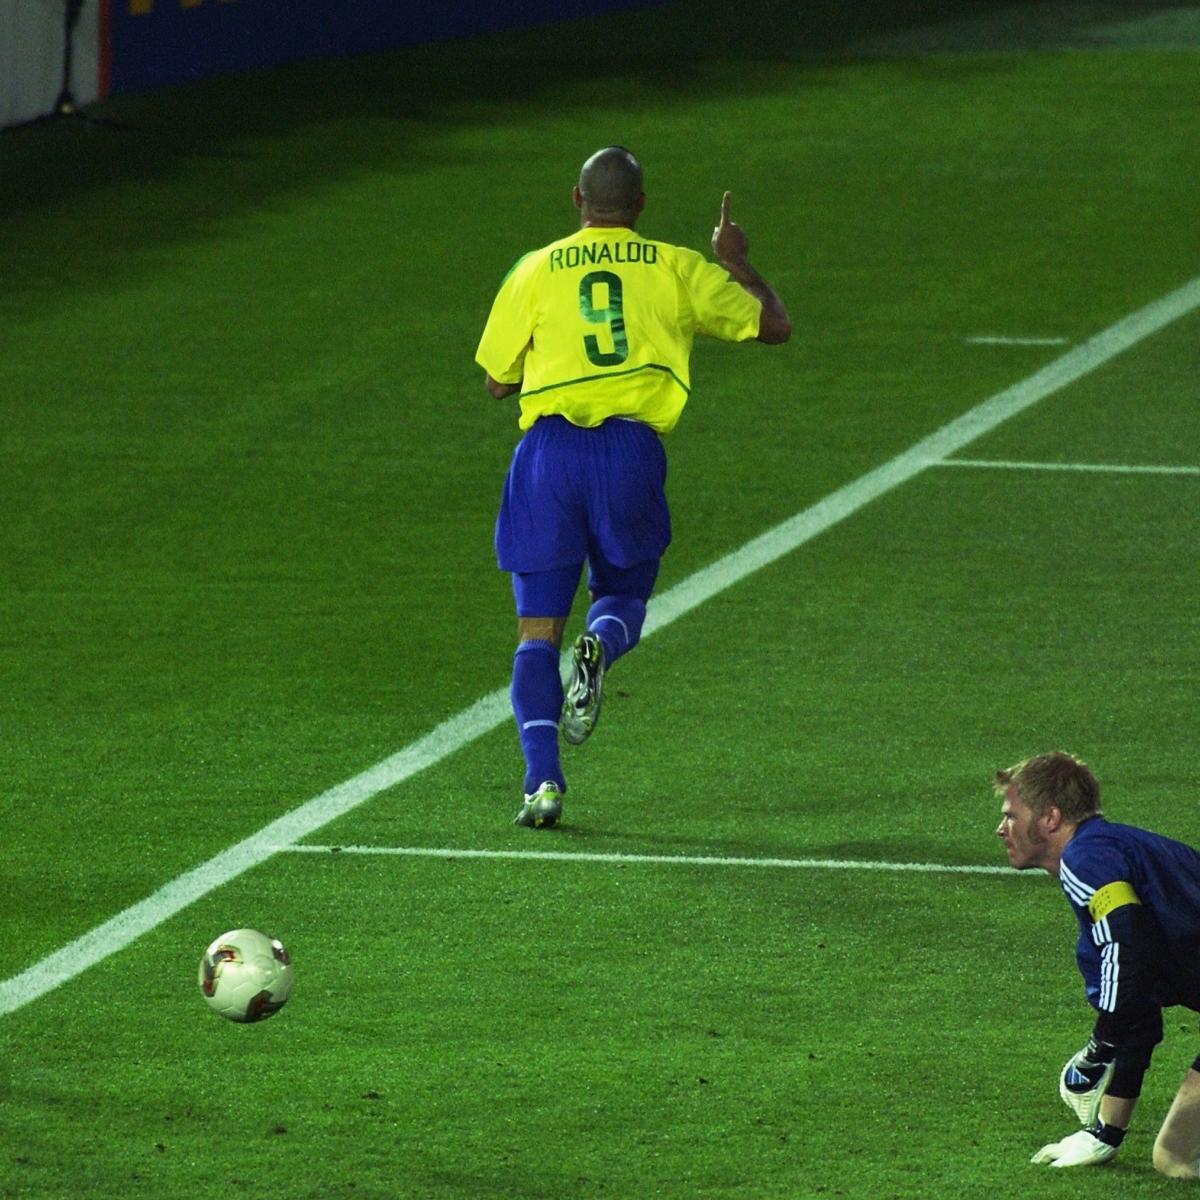 9 Most Unforgettable Penalty Kicks in Football History 